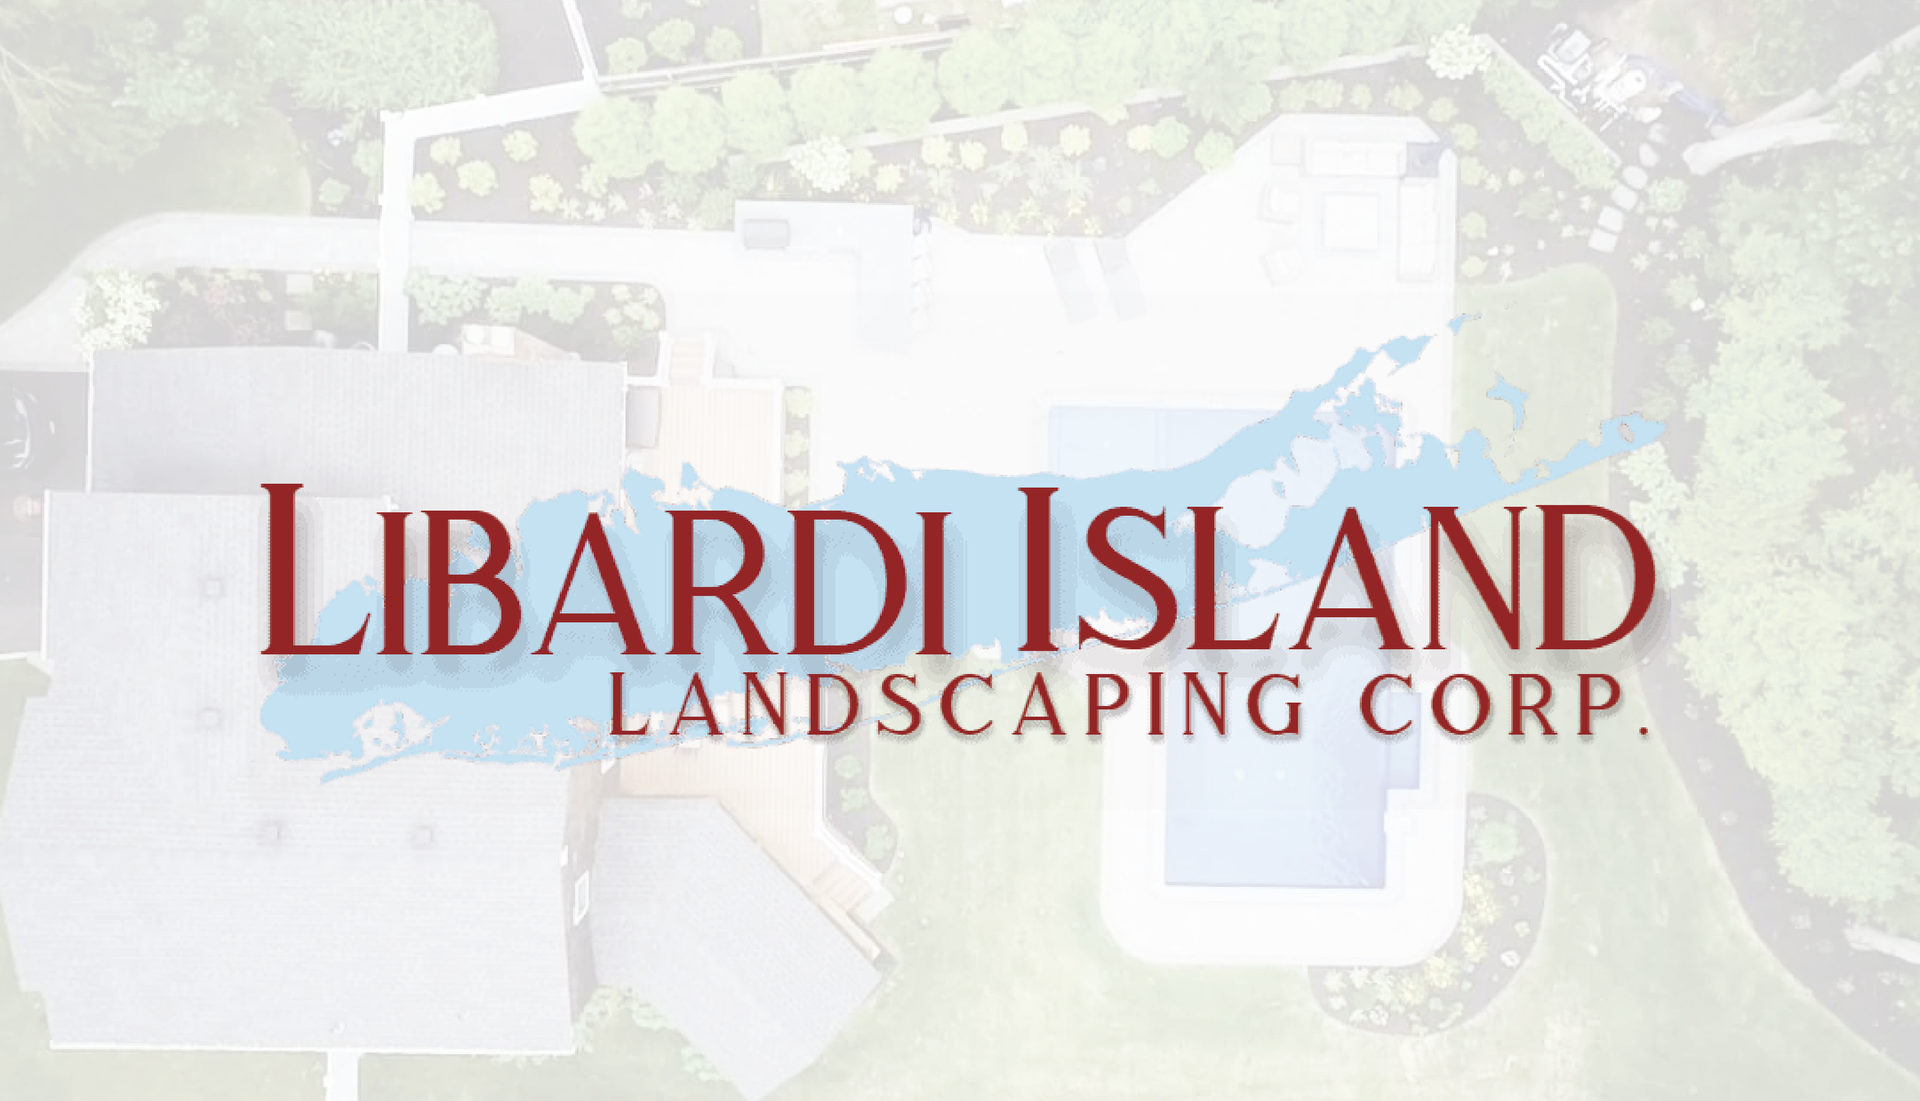 Libardi Island Landscaping Corp.| Web Design | South Shore Creative Media